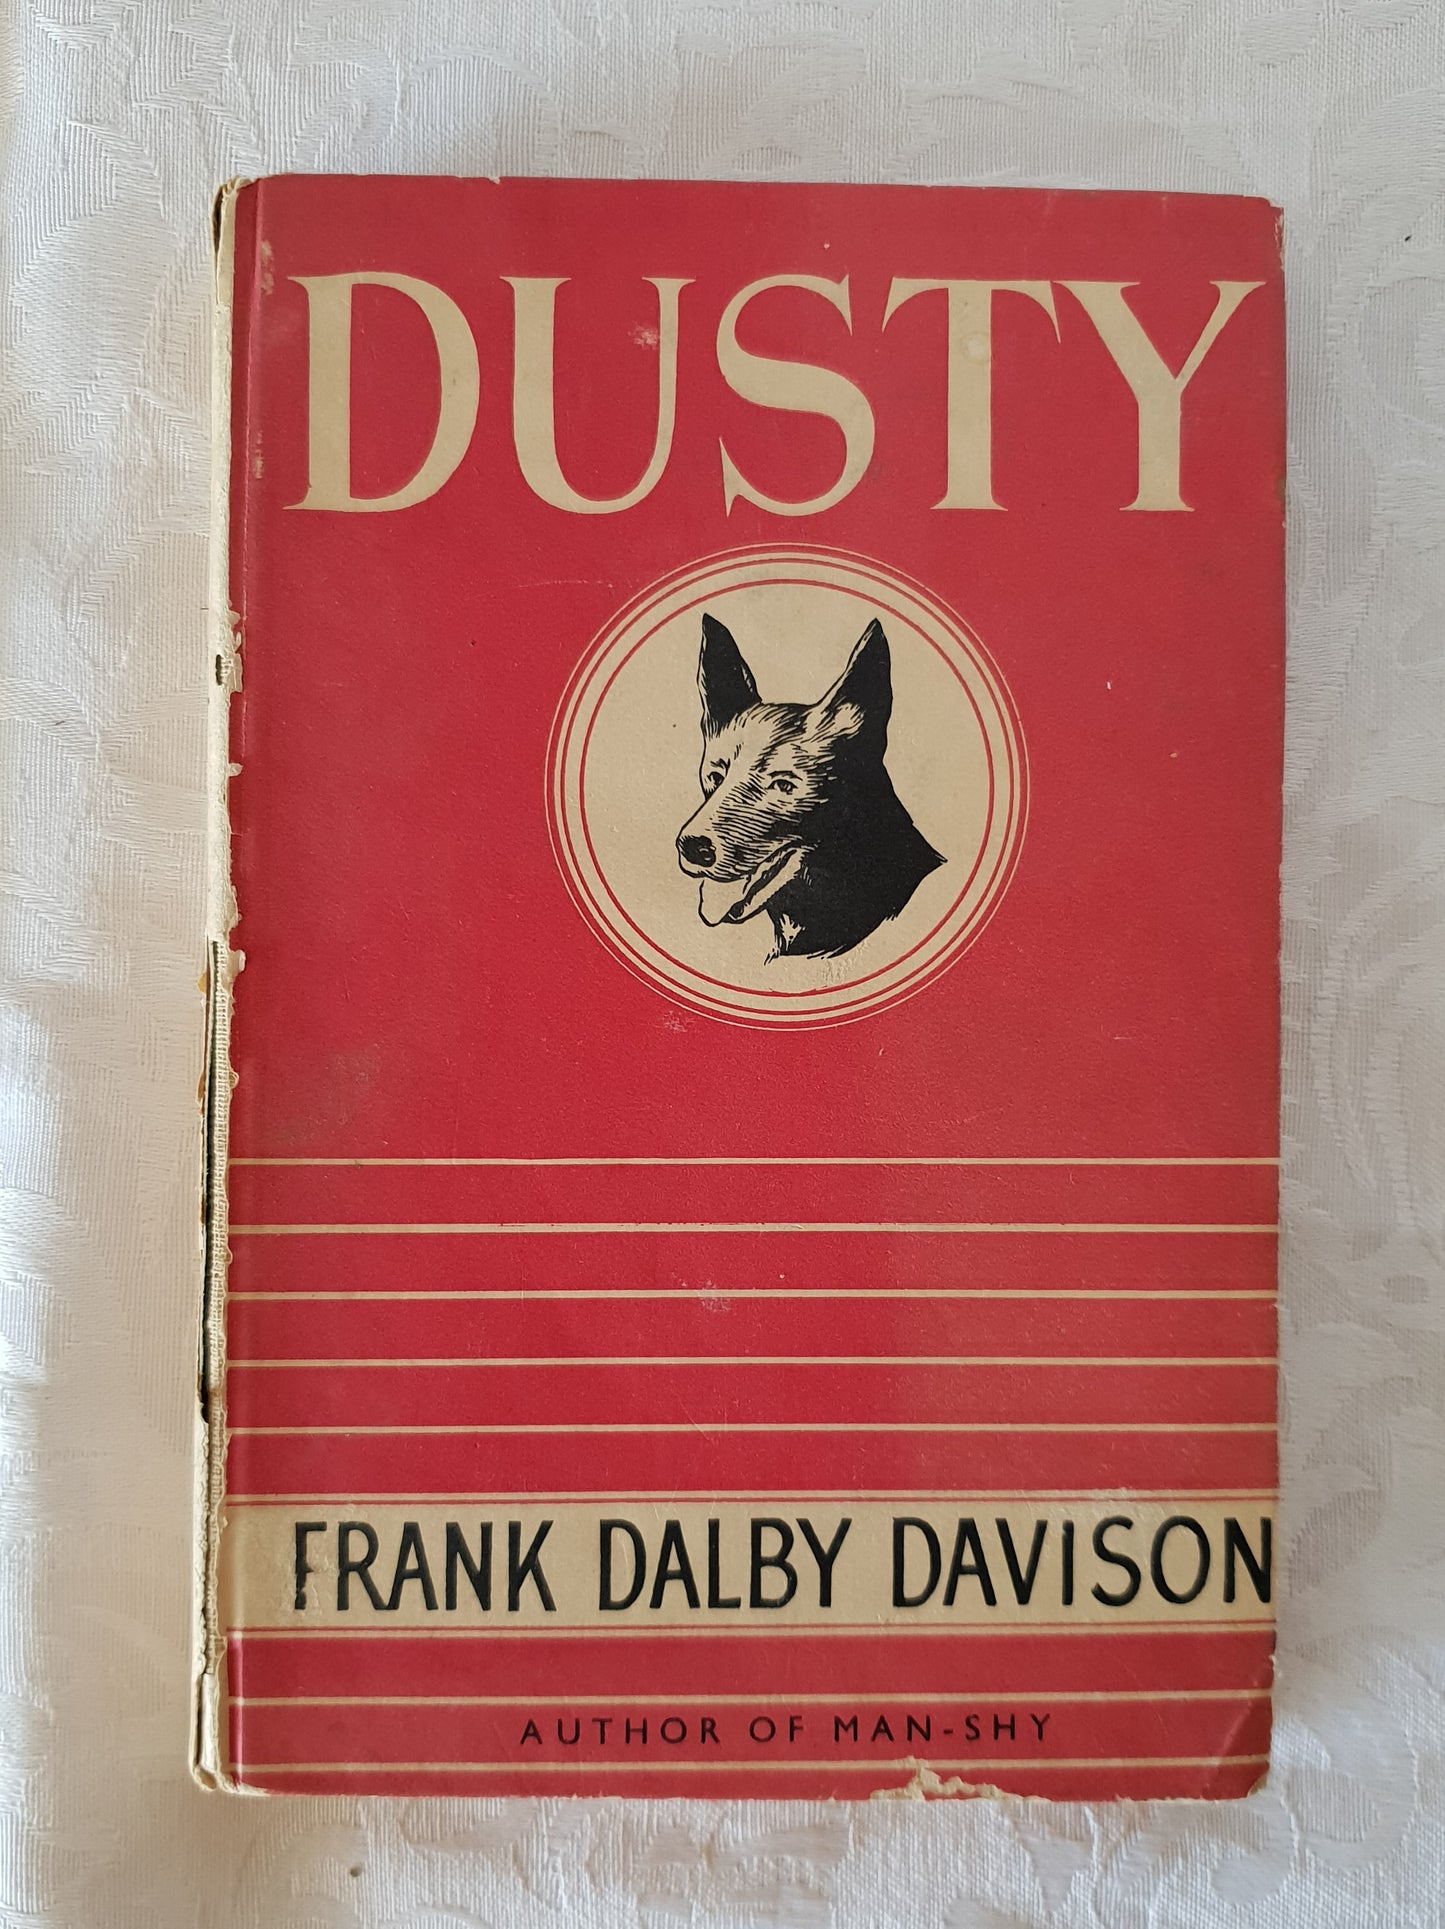 Dusty by Frank Dalby Davison